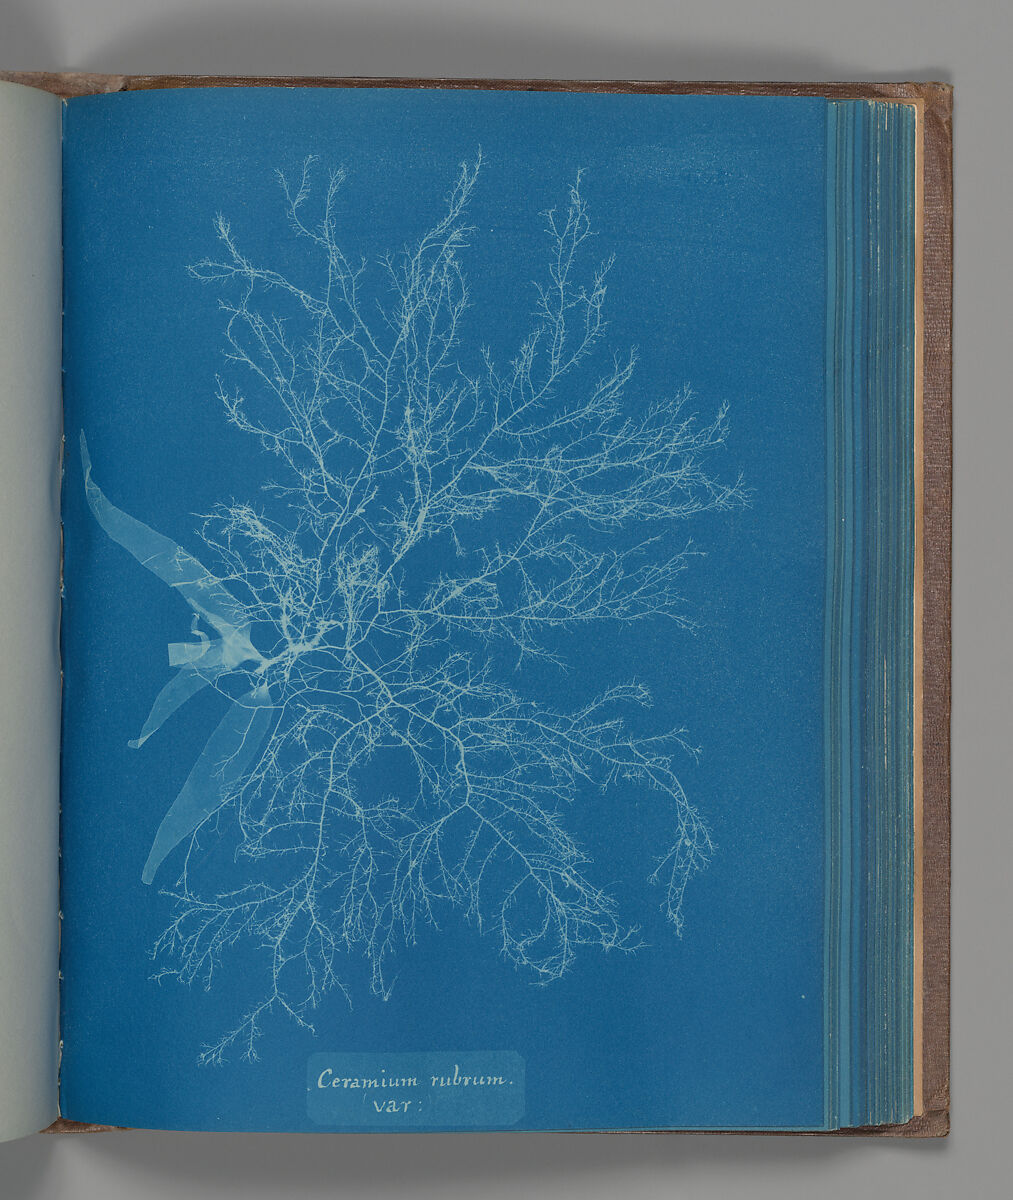 Ceramium rubrum, var., Anna Atkins (British, 1799–1871), Cyanotype 